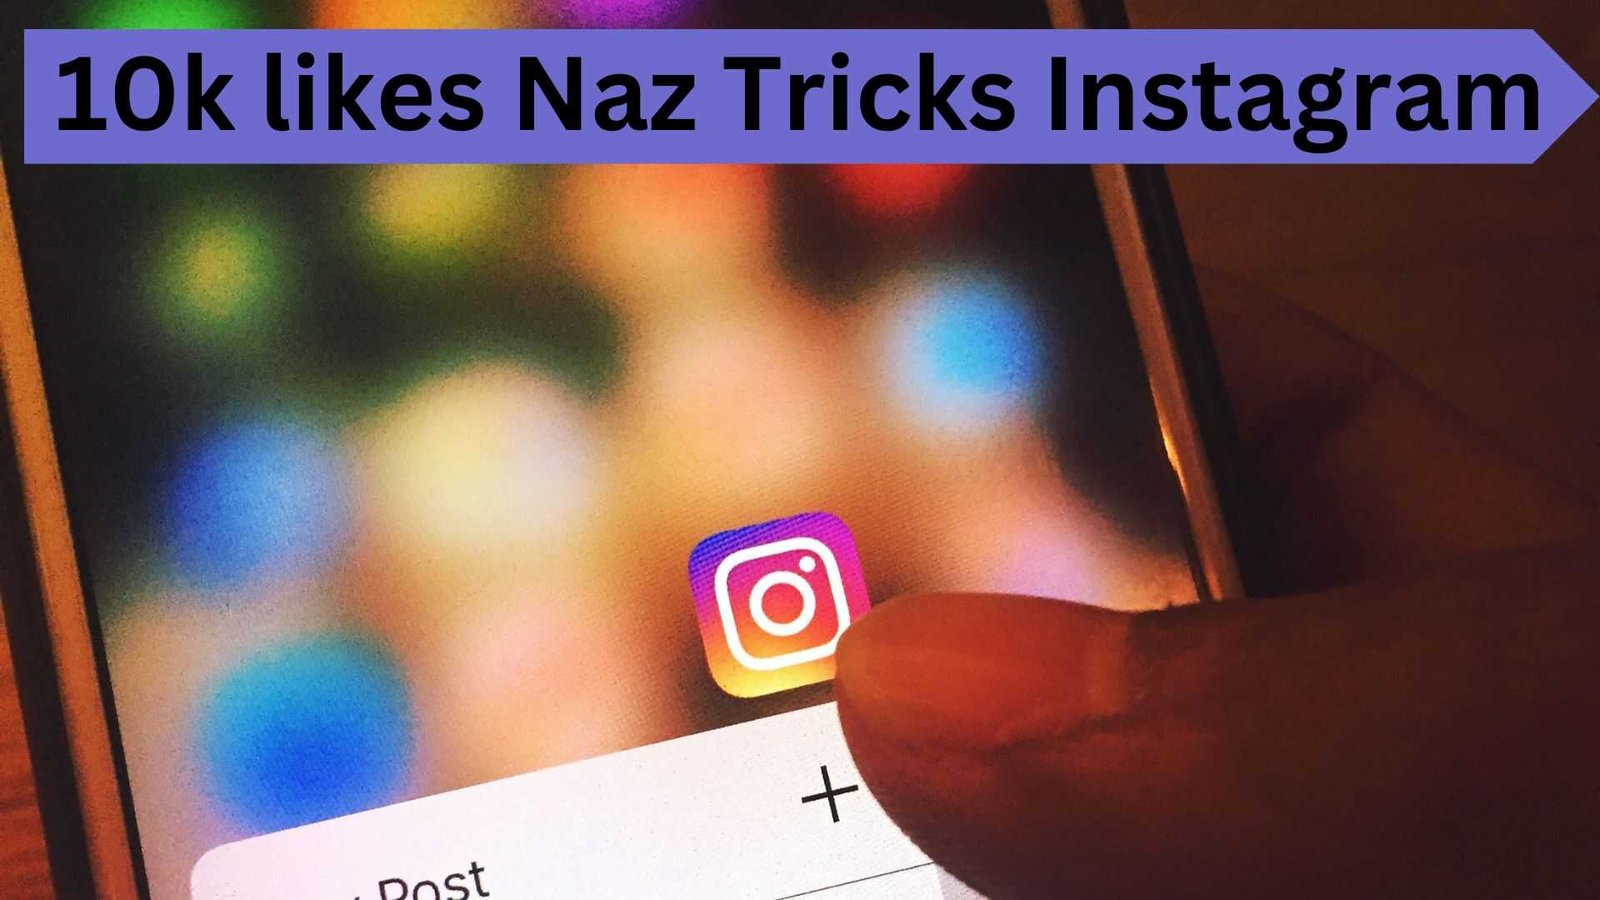 10k likes Naz Tricks Instagram